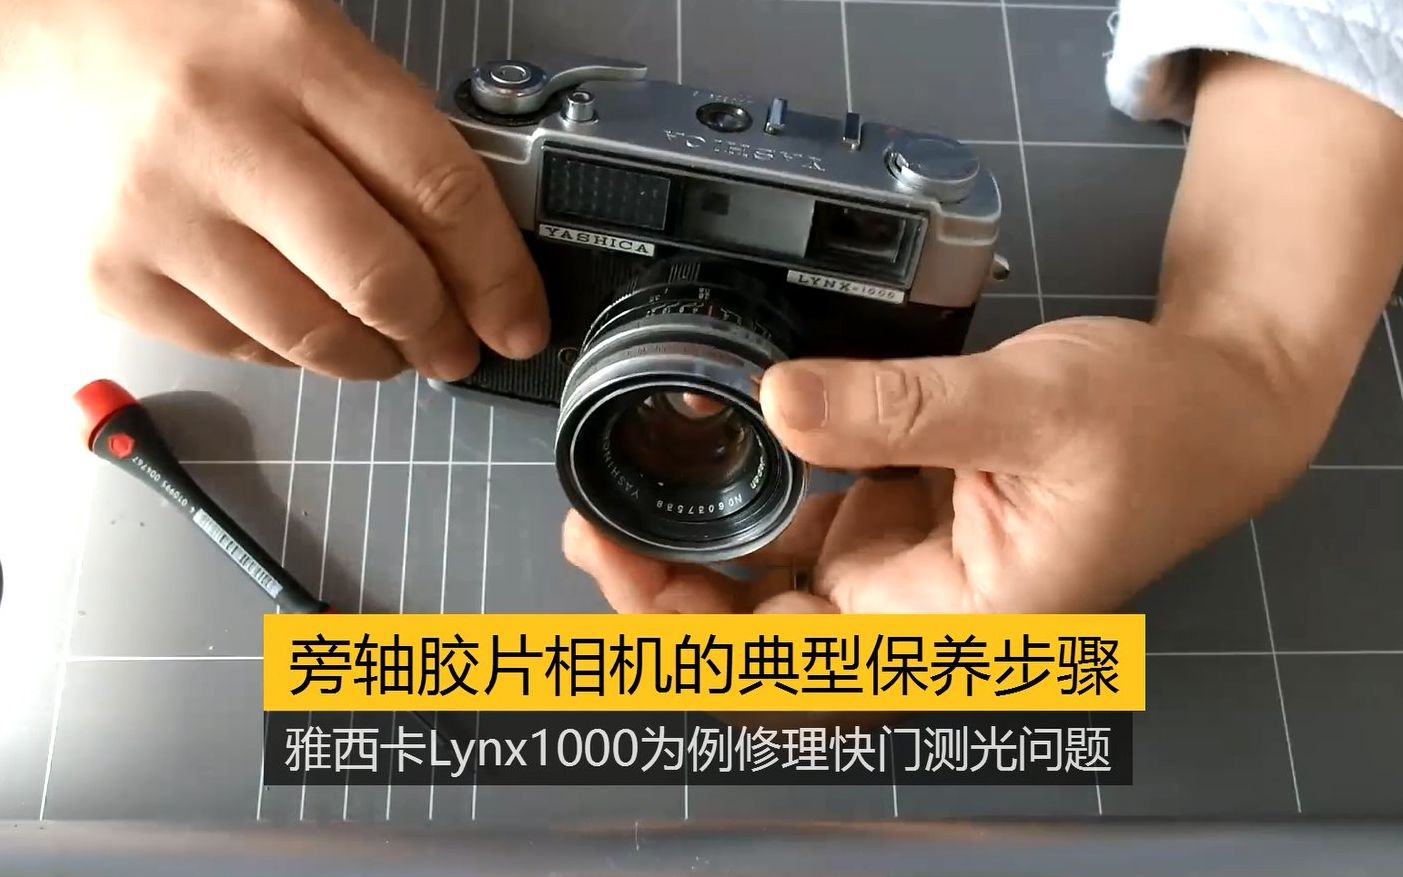 Viewfinder 177 旁轴胶片相机的典型保养步骤 以雅西卡lynx1000为例修理快门测光问题 哔哩哔哩 つロ干杯 Bilibili